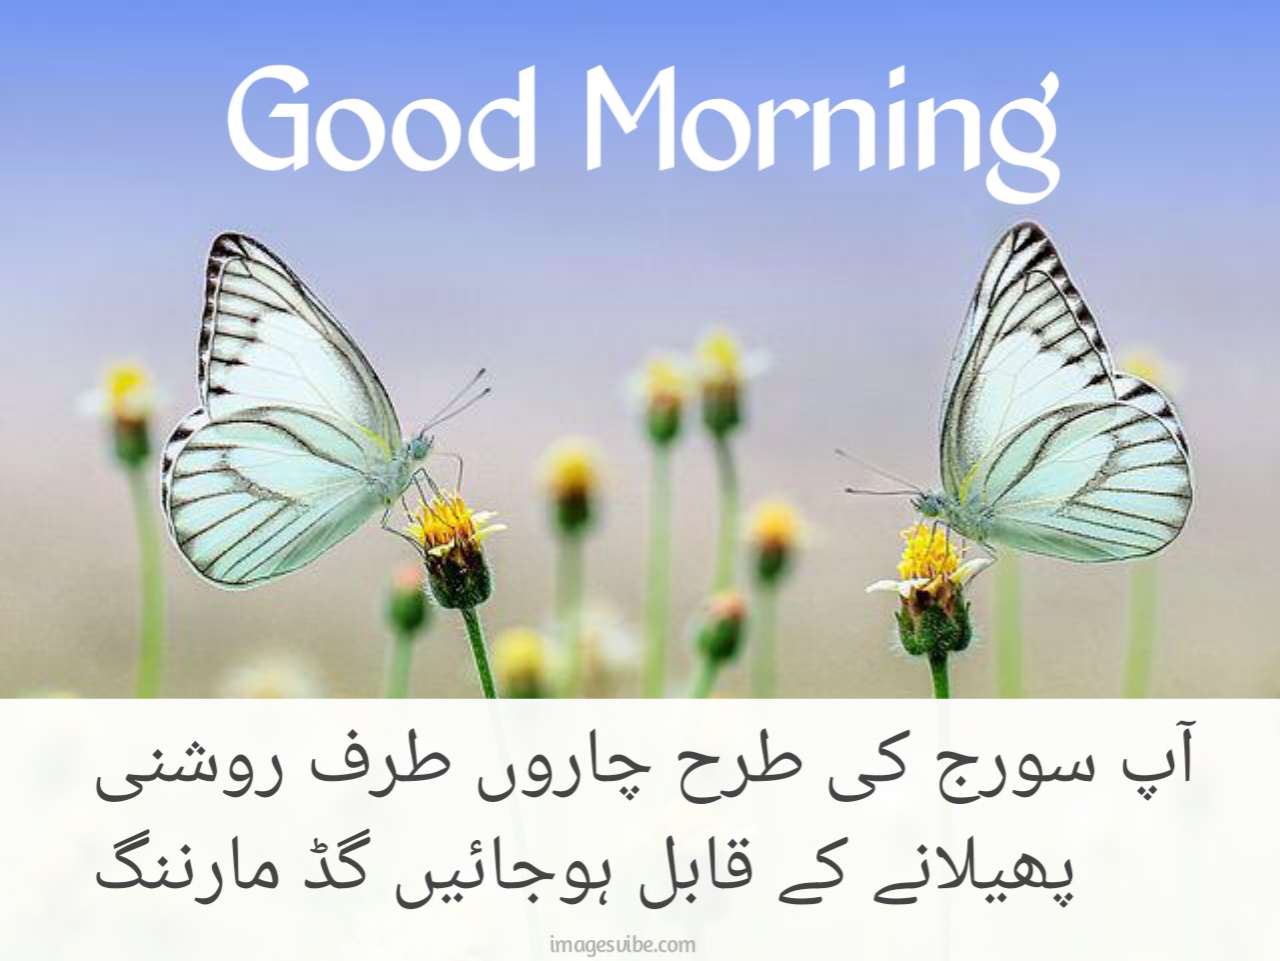 Good Morning Urdu Images